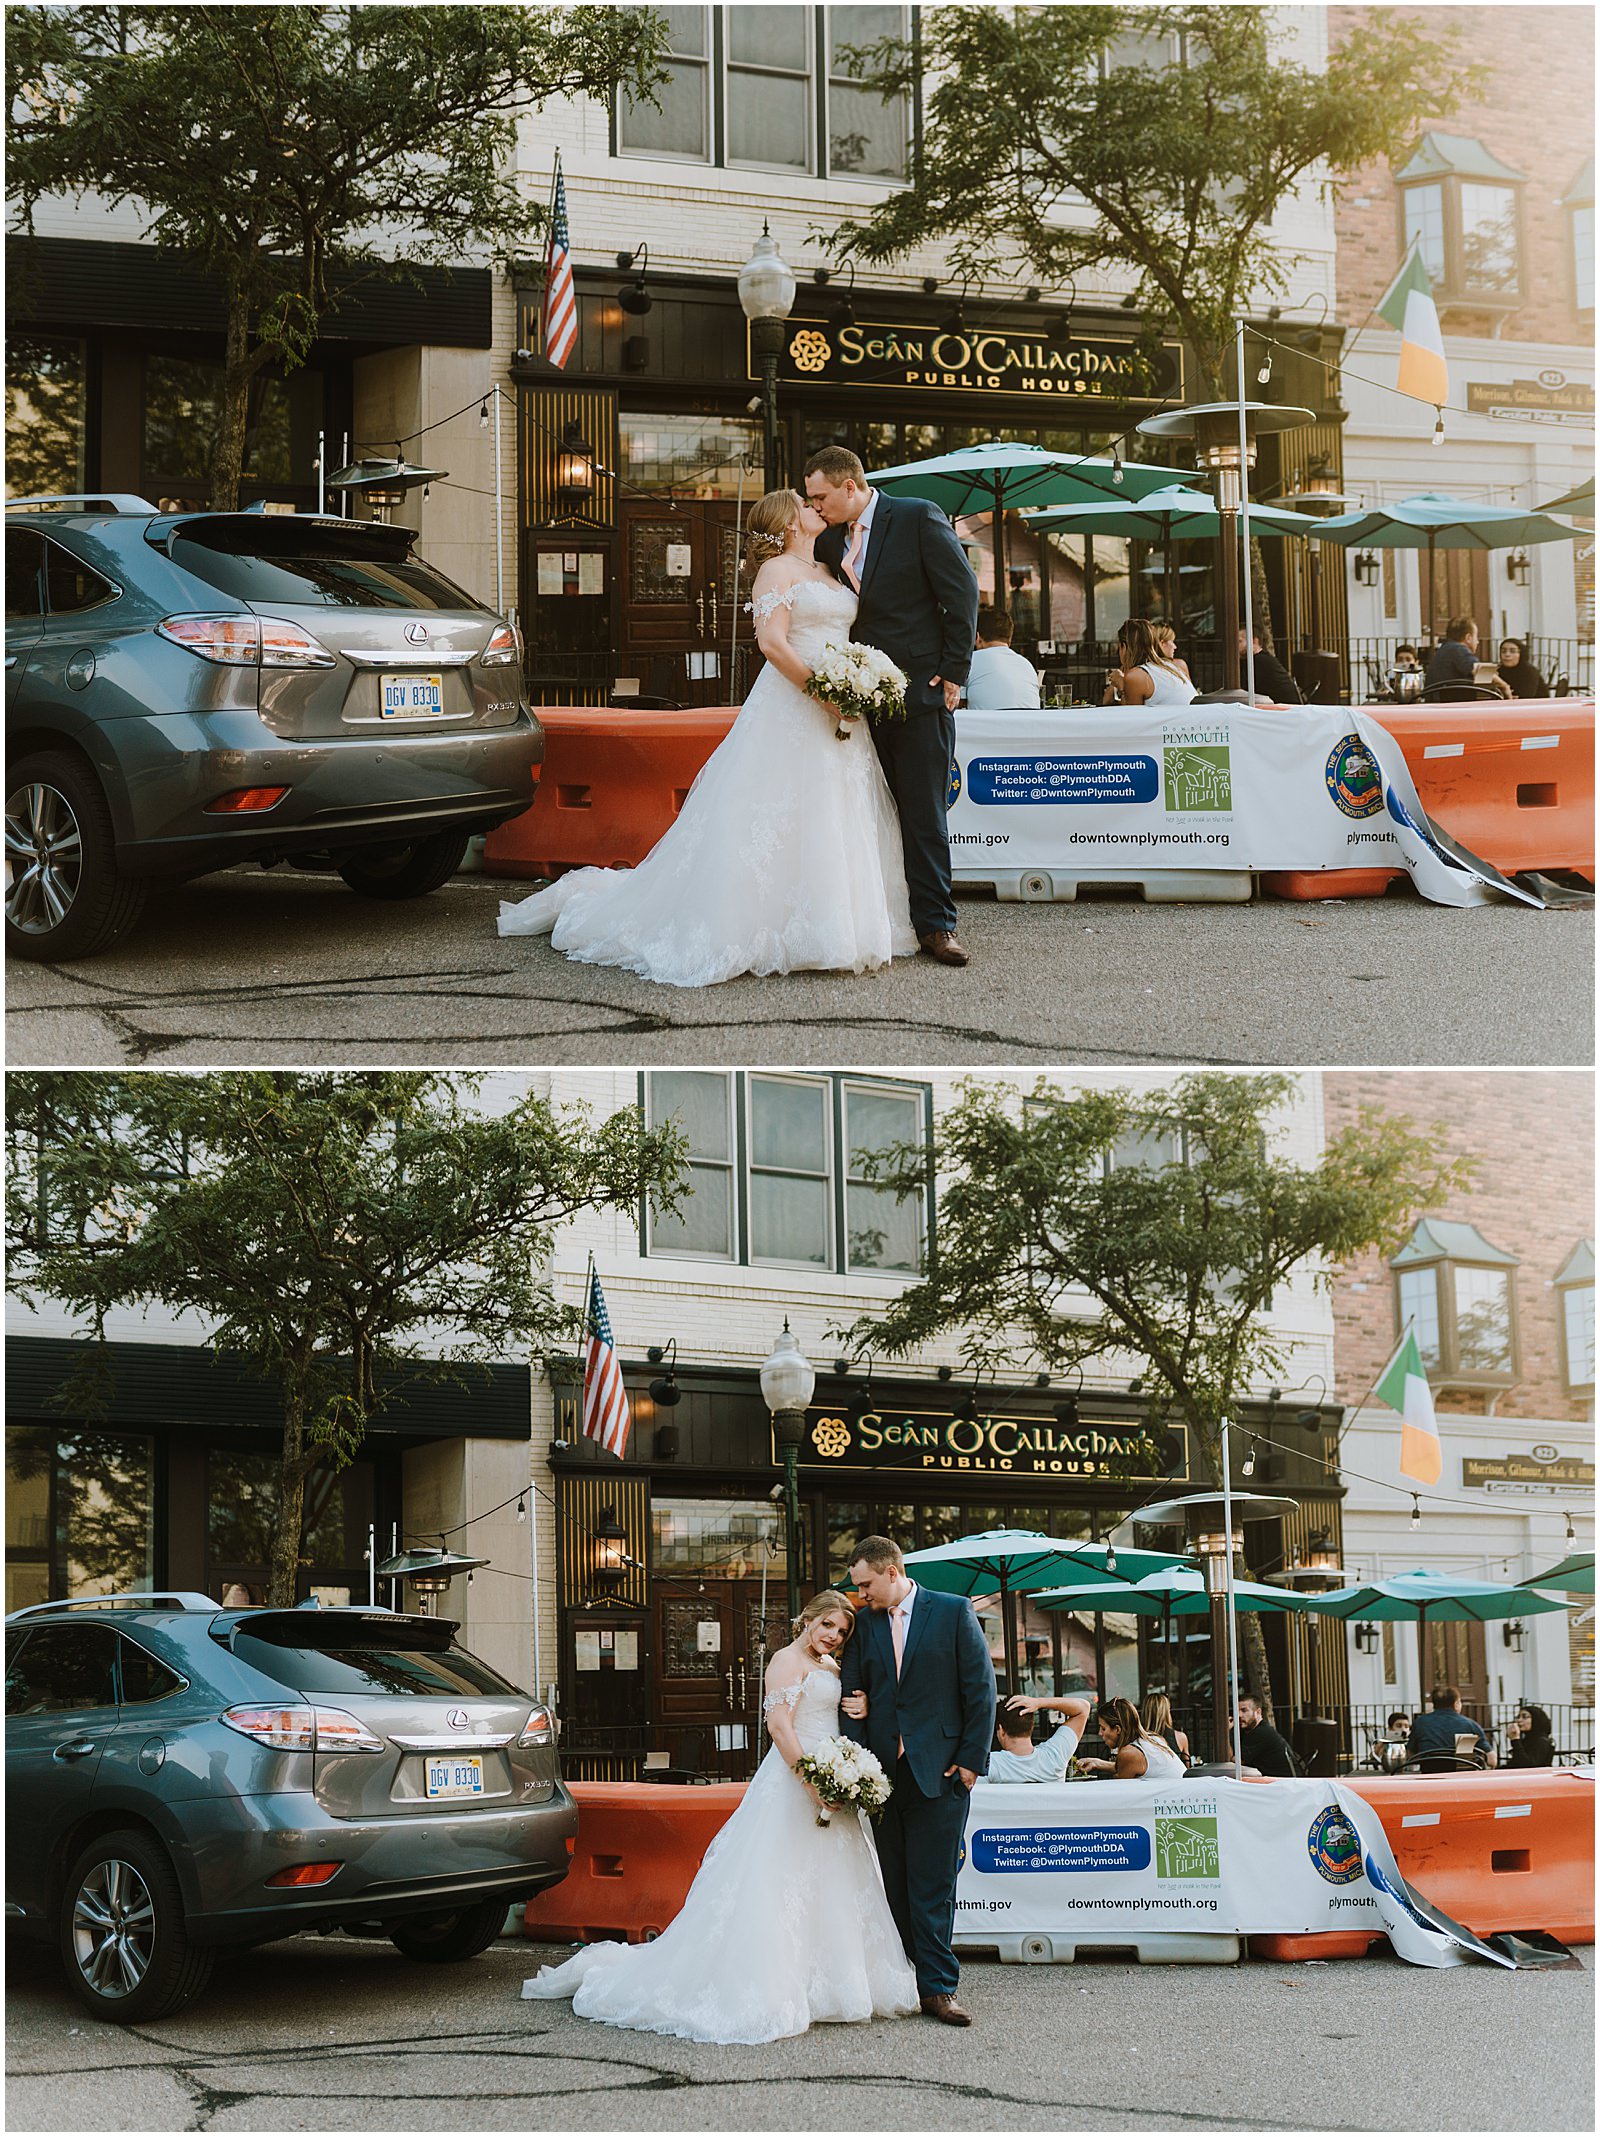 Downtown Plymouth Wedding Photos